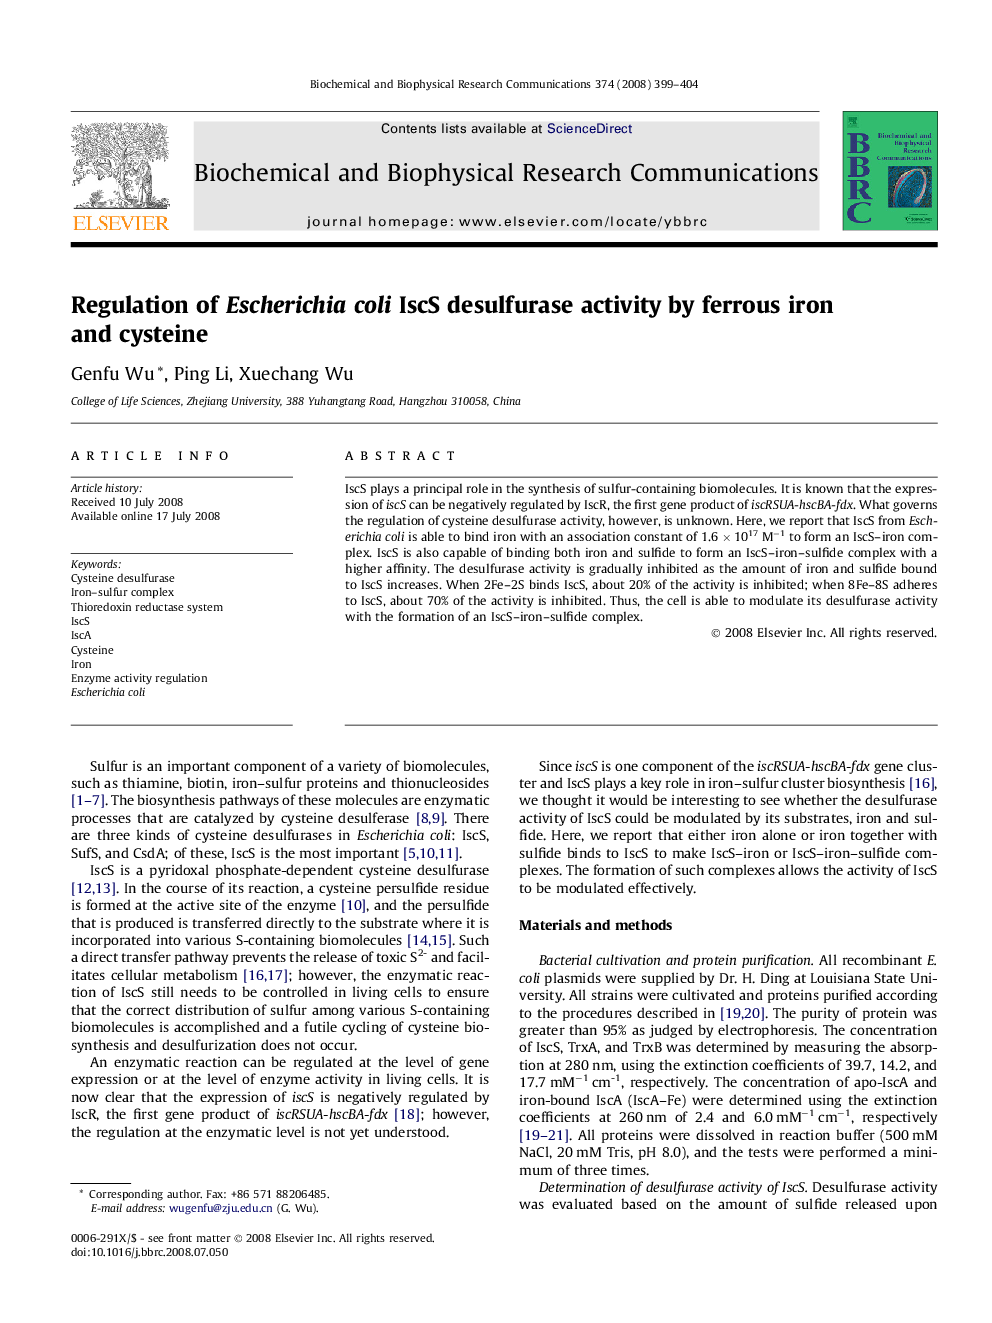 Regulation of Escherichia coli IscS desulfurase activity by ferrous iron and cysteine